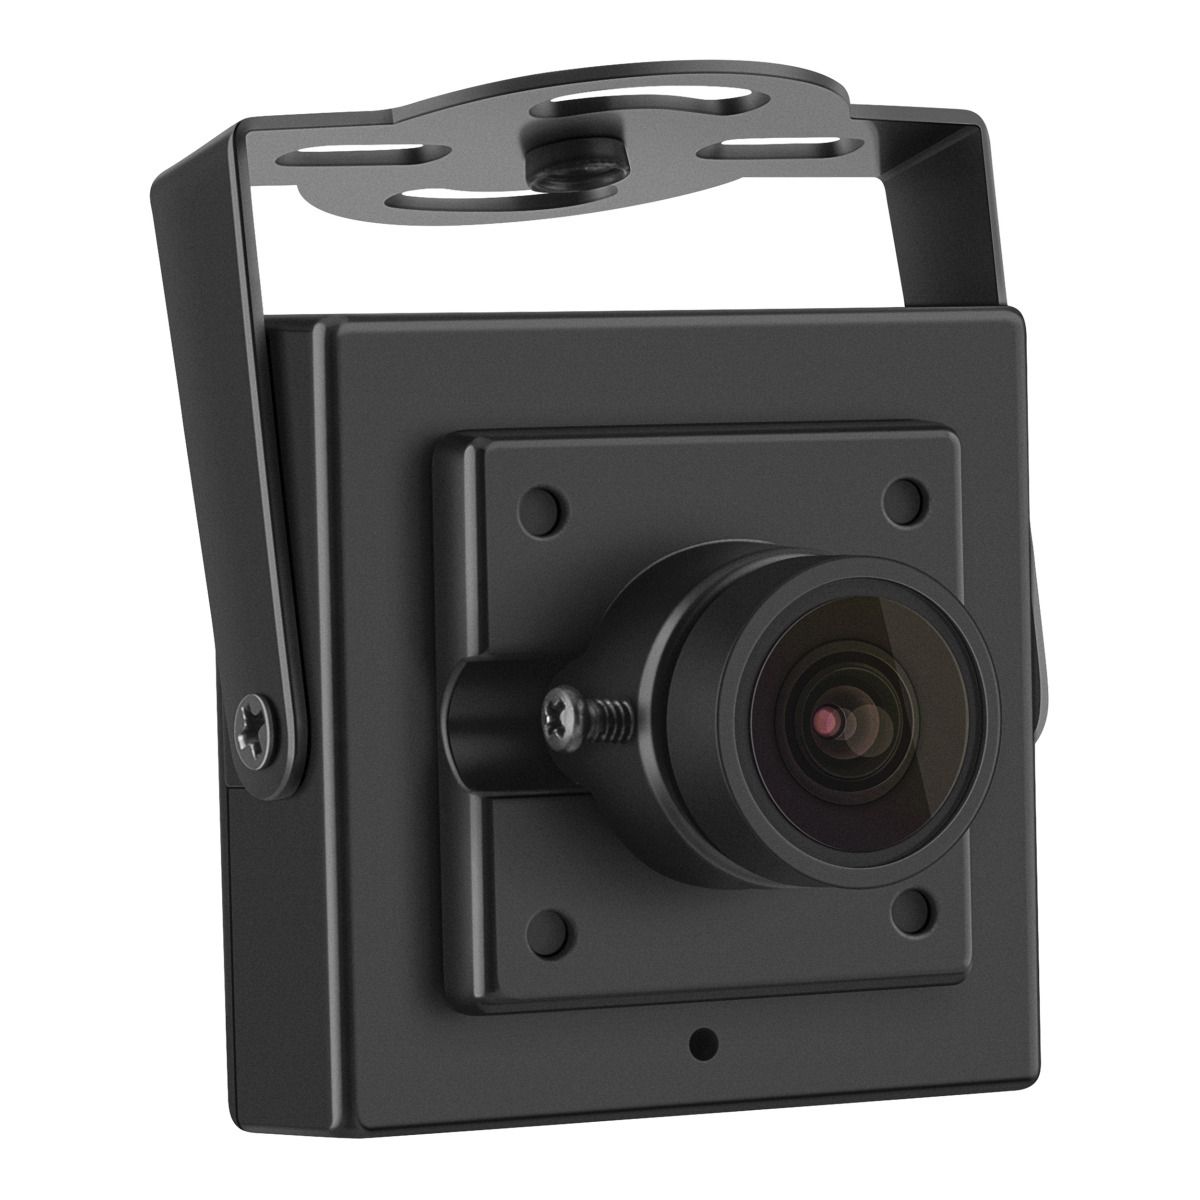  Cámara oculta - Cámara espía - Micro cámara - Mini cámara -  Nanny Cam - Cámaras pequeñas para espiar - Cámara interior y exterior con  visión nocturna - Cámara de vigilancia Full HD-23 : Electrónica